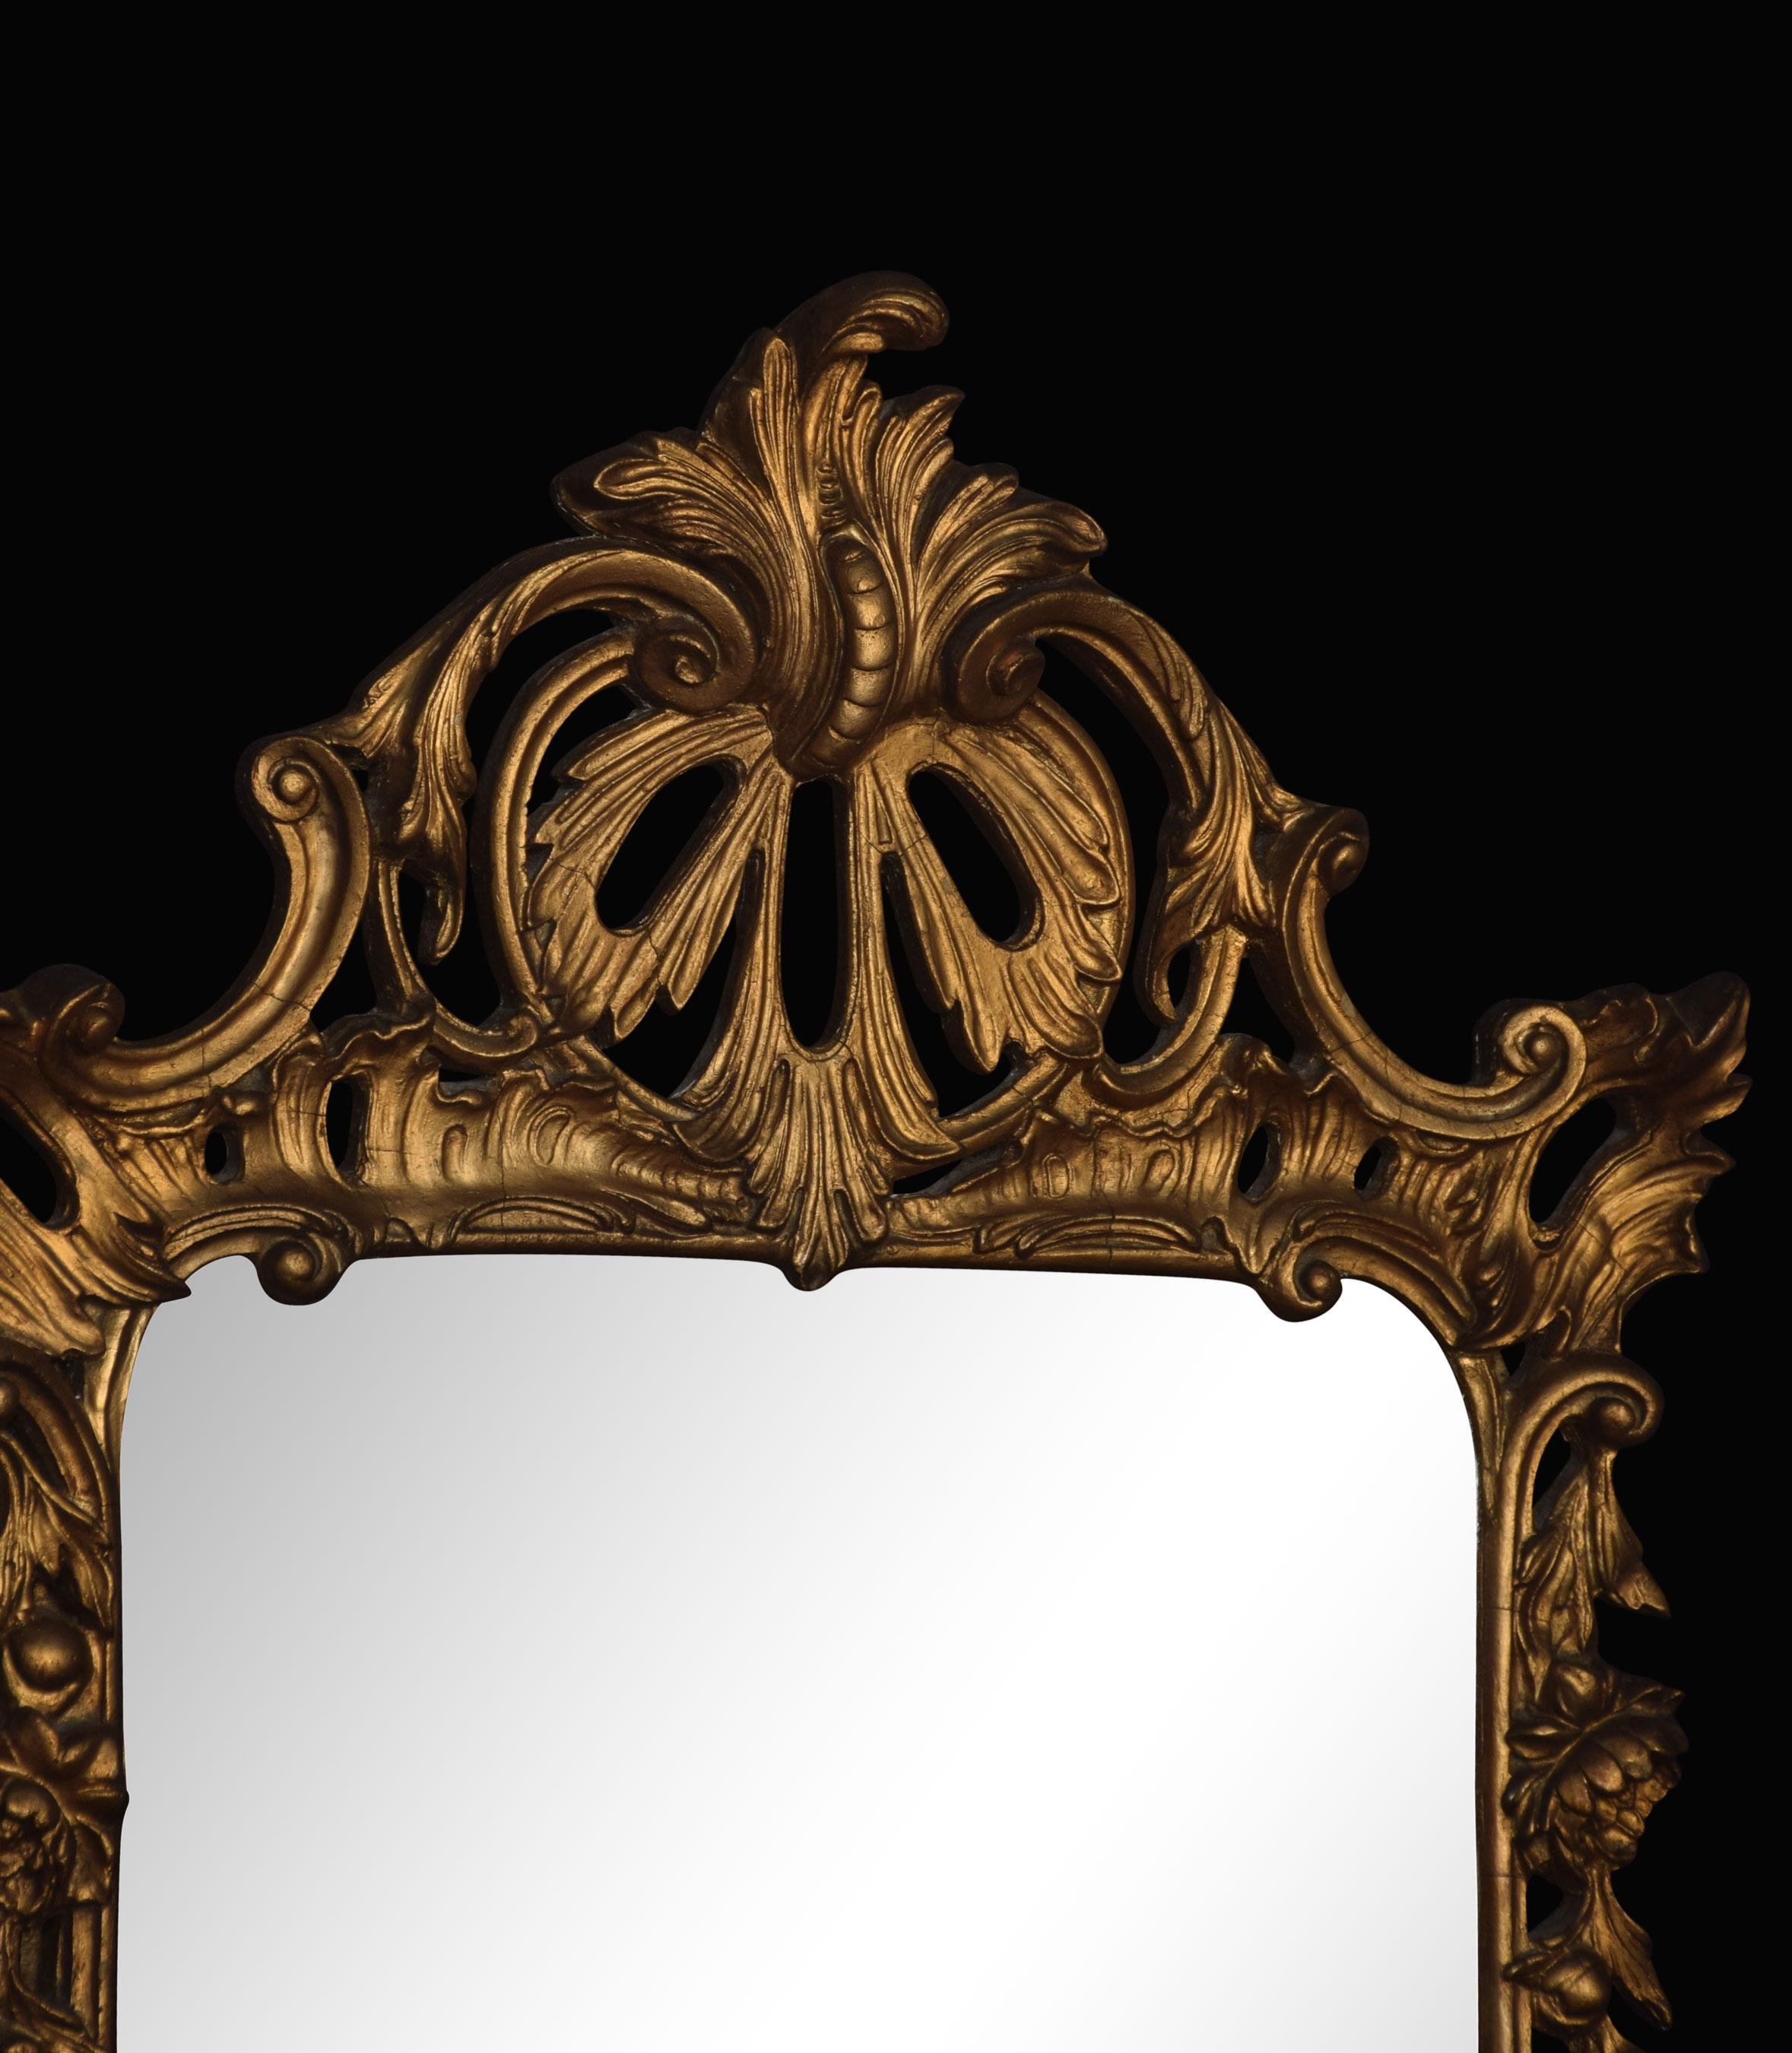 Rococo Revival Gilt Mirror In Good Condition For Sale In Cheshire, GB